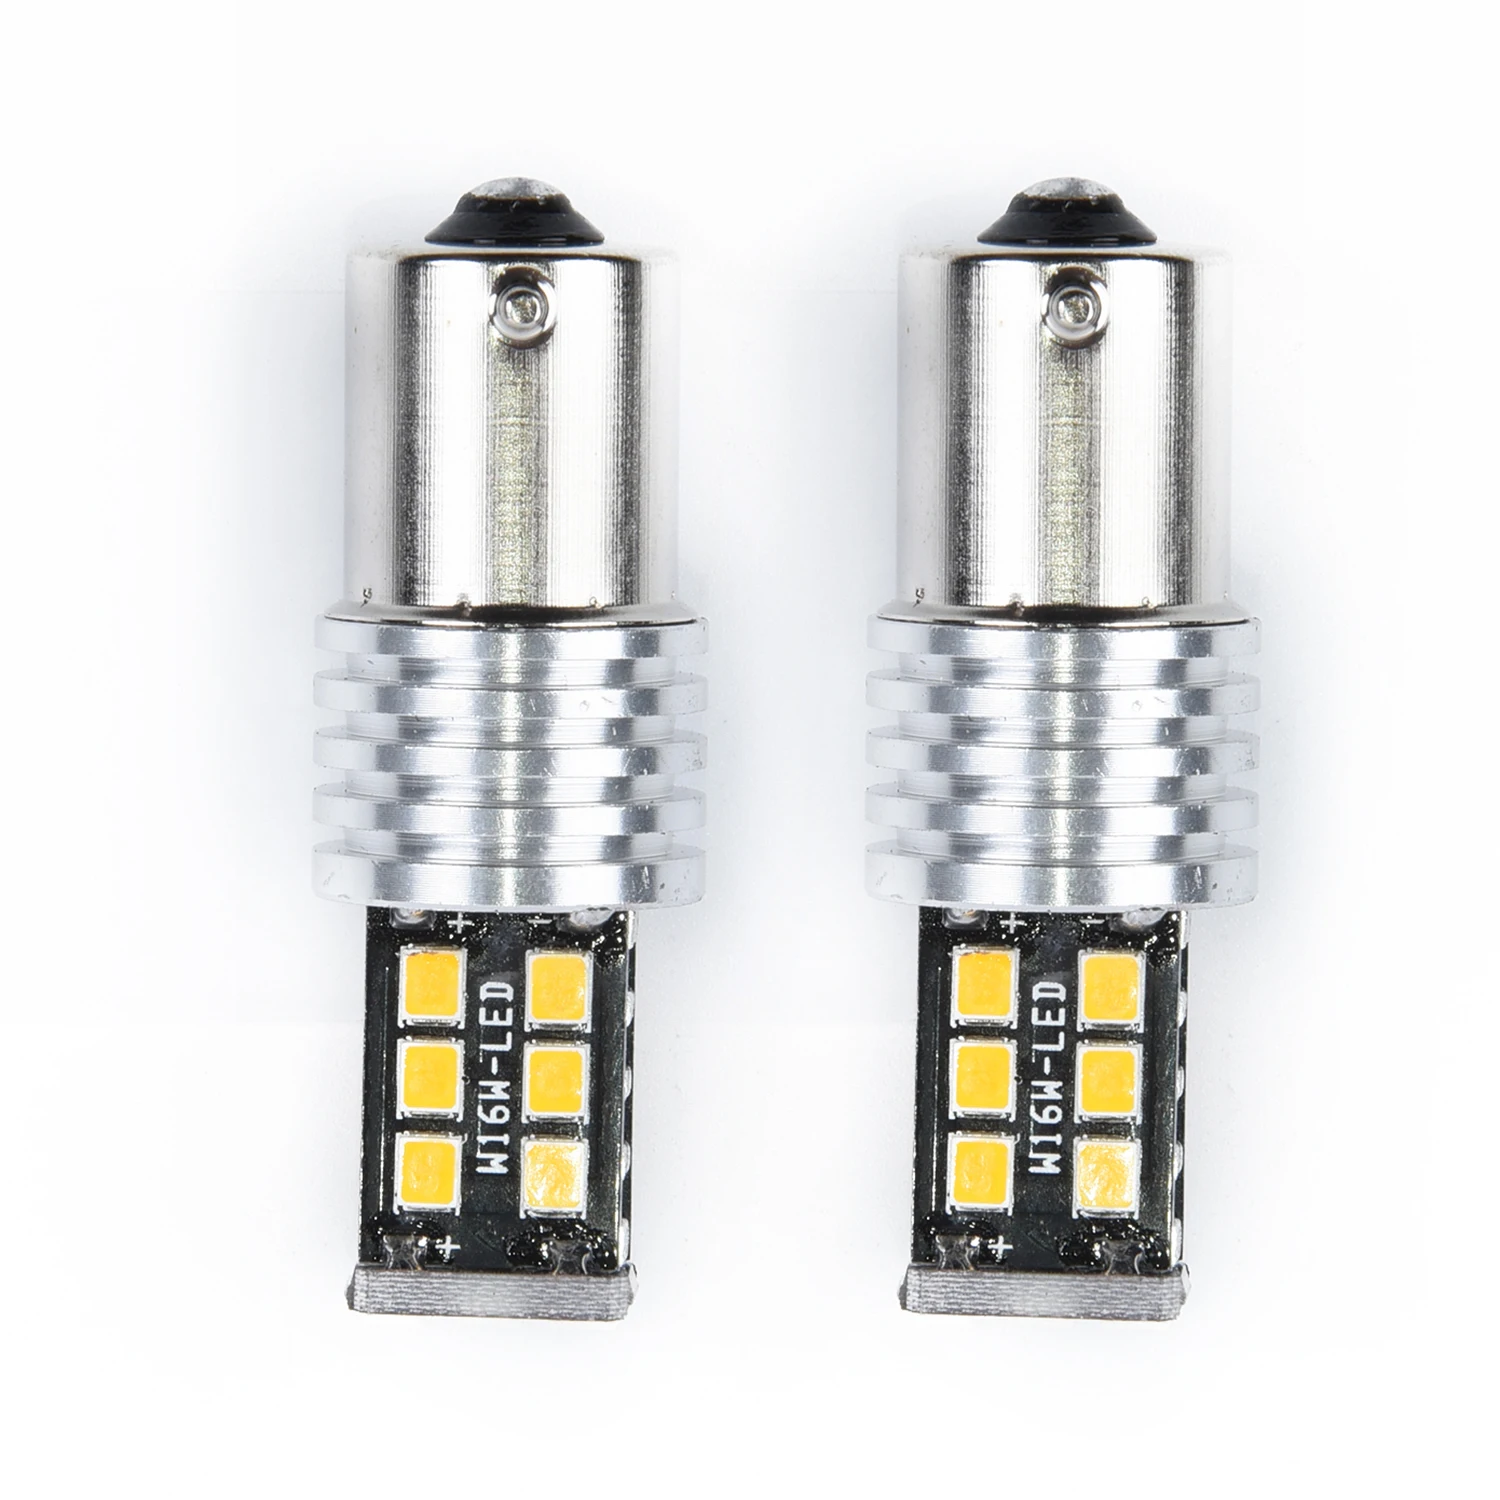 

P21/5W Signal Lights LED Lamp 15LED 6W Turn Light 2pcs Replaces 2x 15-SMD